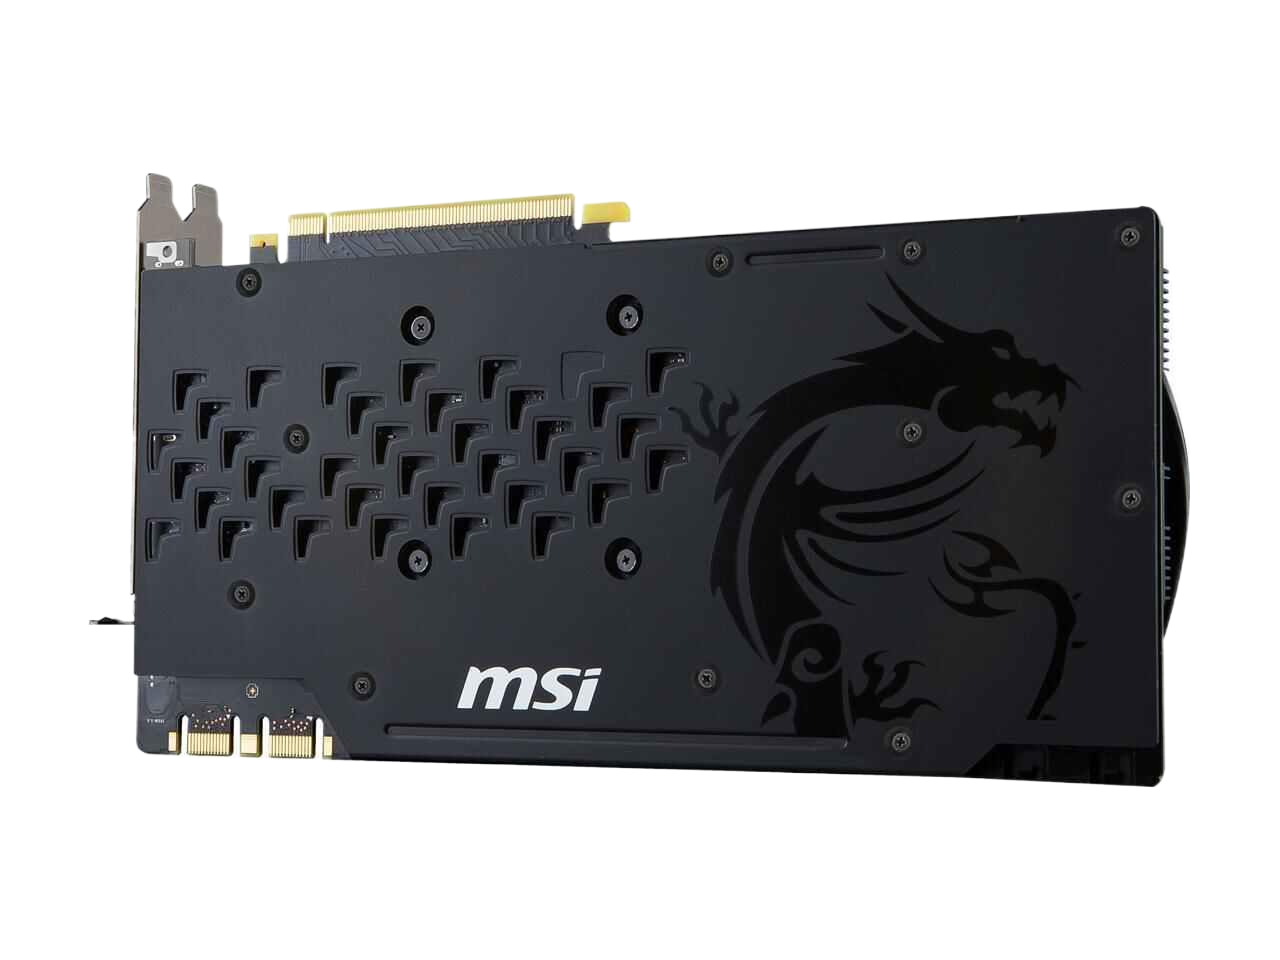 MSI GeForce GTX 1070 Ti GAMING 8GB 256-Bit GDDR5 DirectX 12 PCI Express 3.0 x16 HDCP Ready SLI Support ATX Video Card